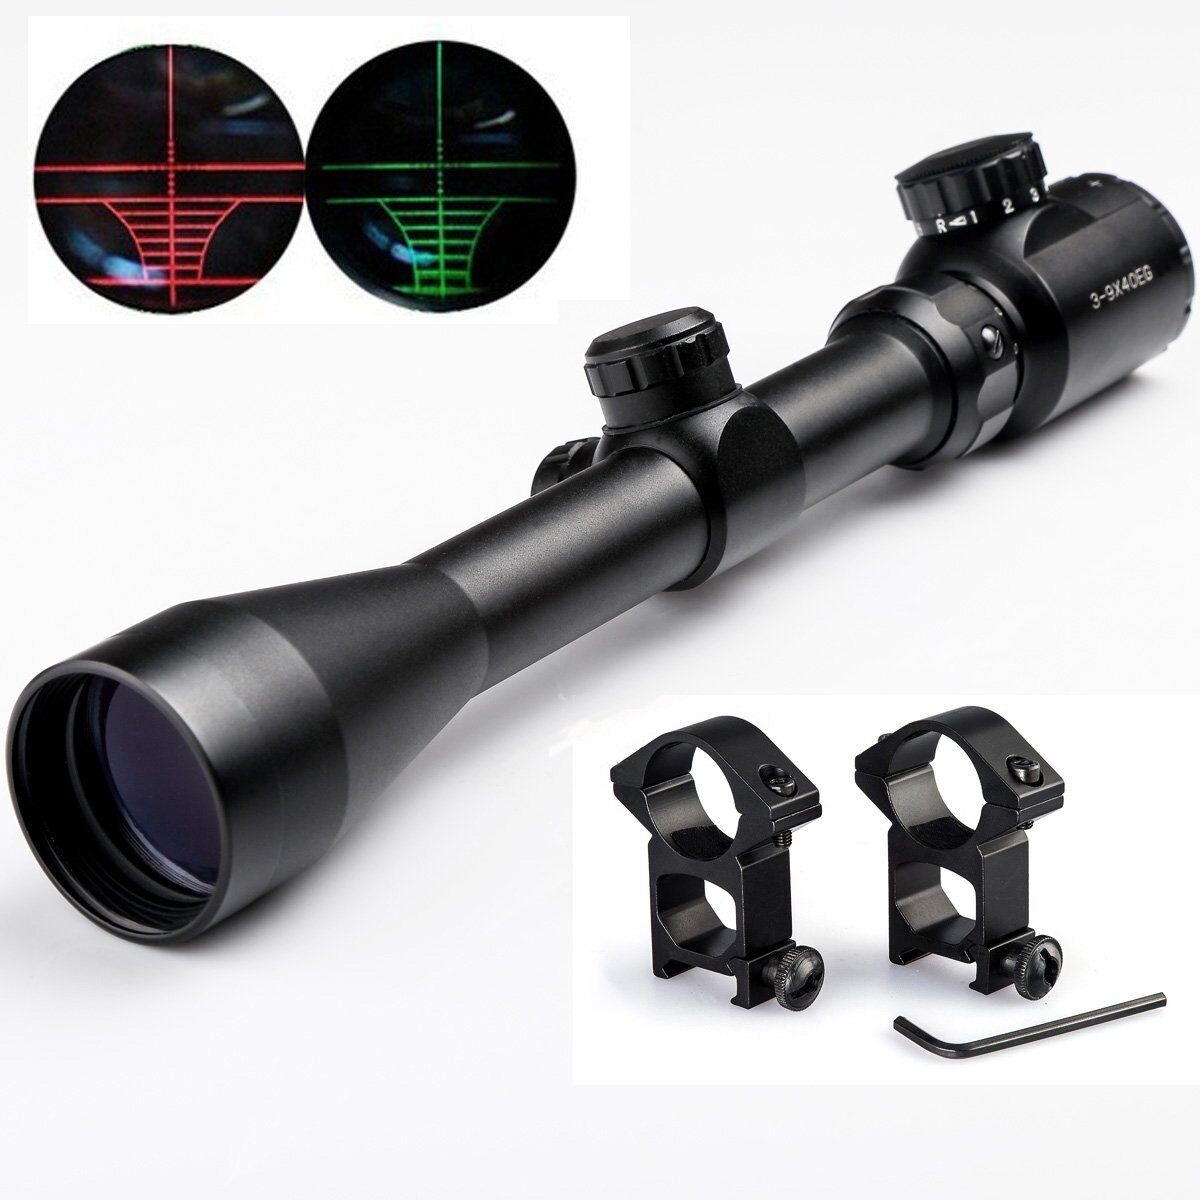 Cvlife 3-9X40E Red & Green Mil-dot Illuminated Optics Hunting Sniper Scope